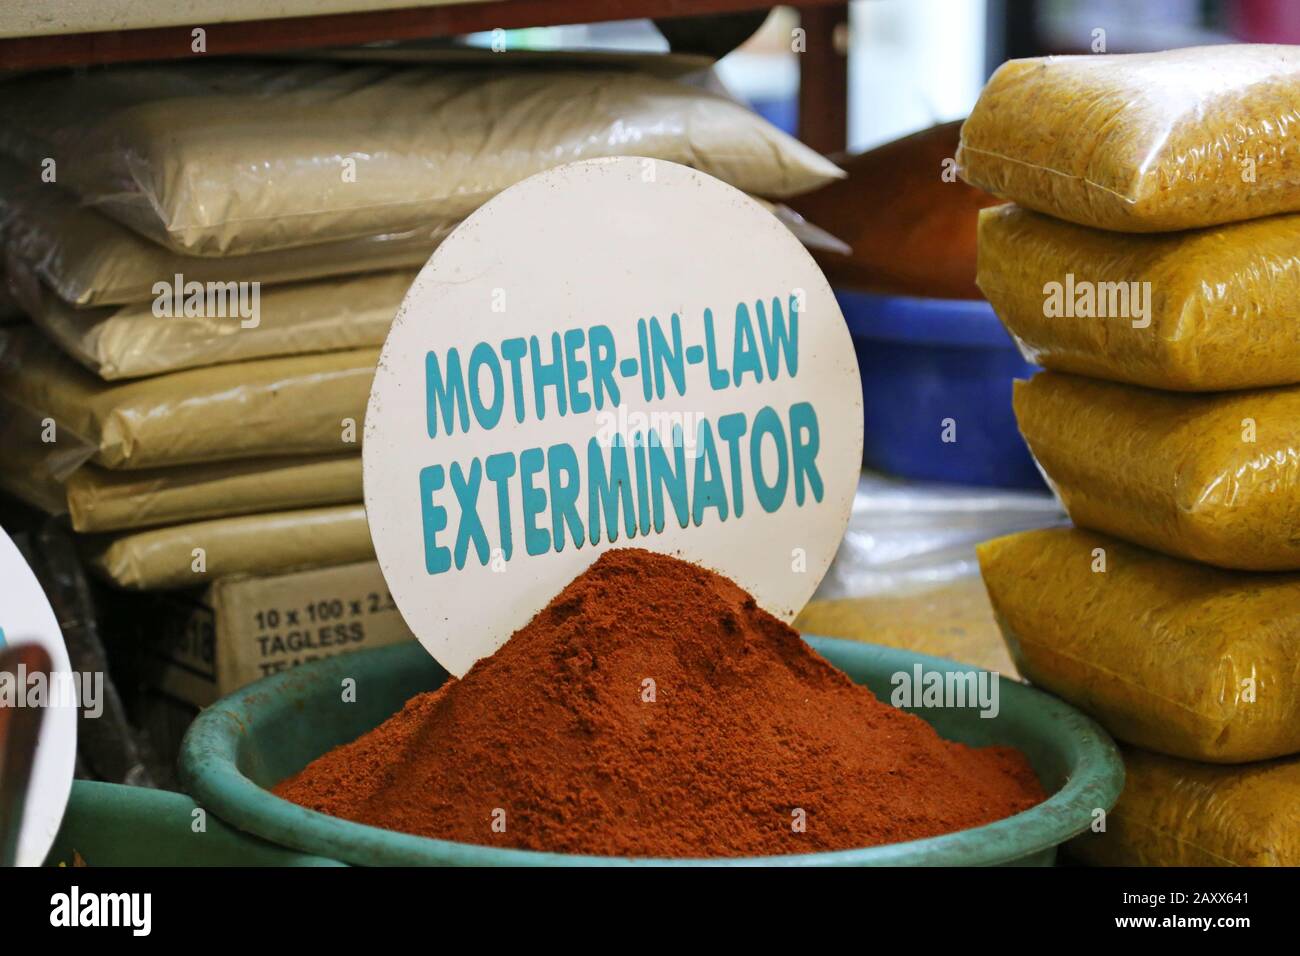 "Other-in-Law Exterminator"-Gewürzgeschäft, Victoria Street Market, Bertha Mkhize Street, Durban, Kwa Zulu-Natal Provinz, Südafrika, Afrika Stockfoto